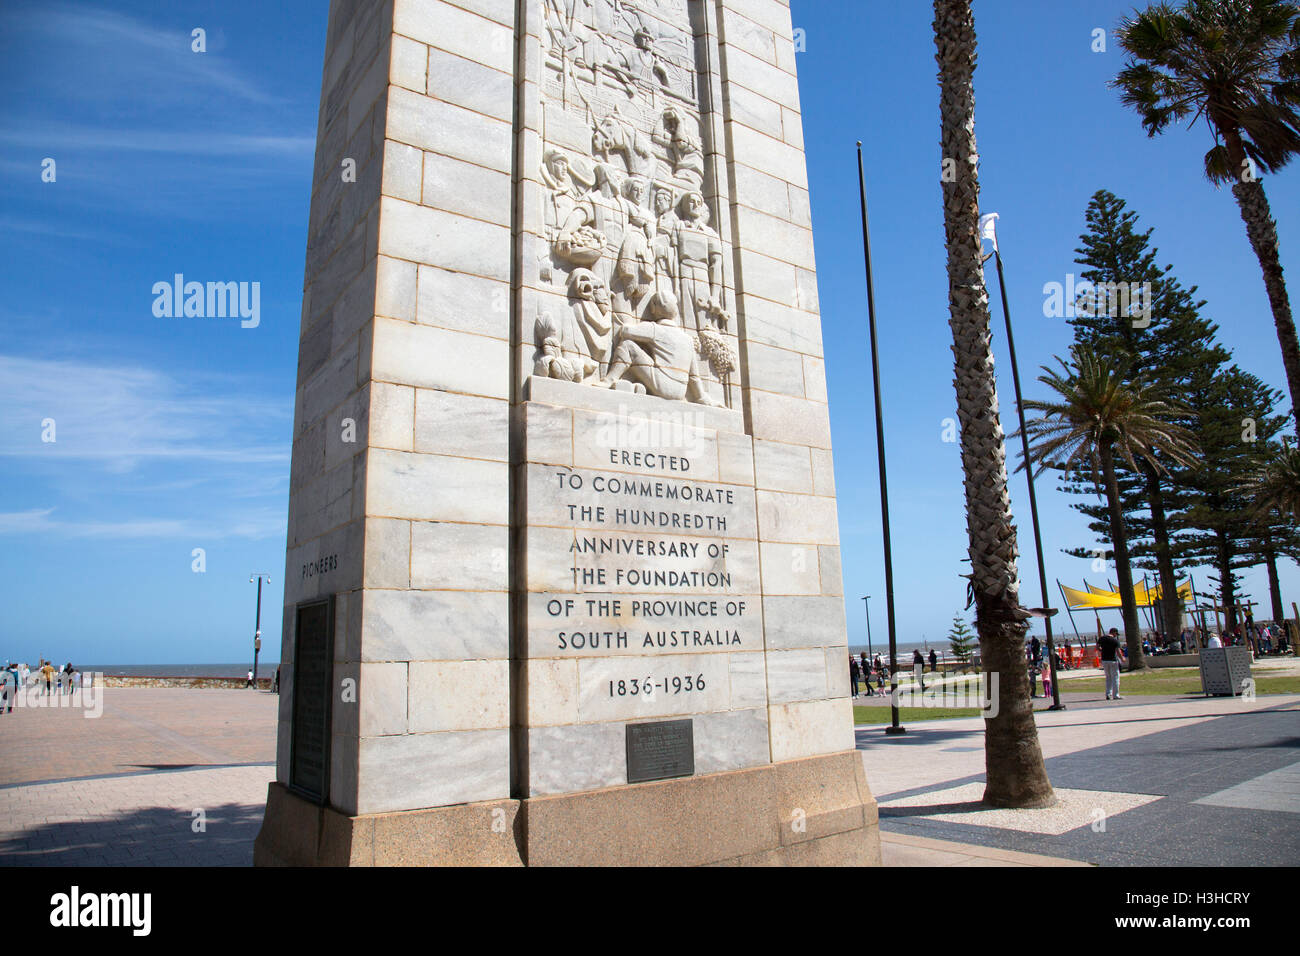 Glenelg on the coast of South Australia,centenery tower erected to celebrate 100 years 1836-1936 foundation of South Australia Stock Photo